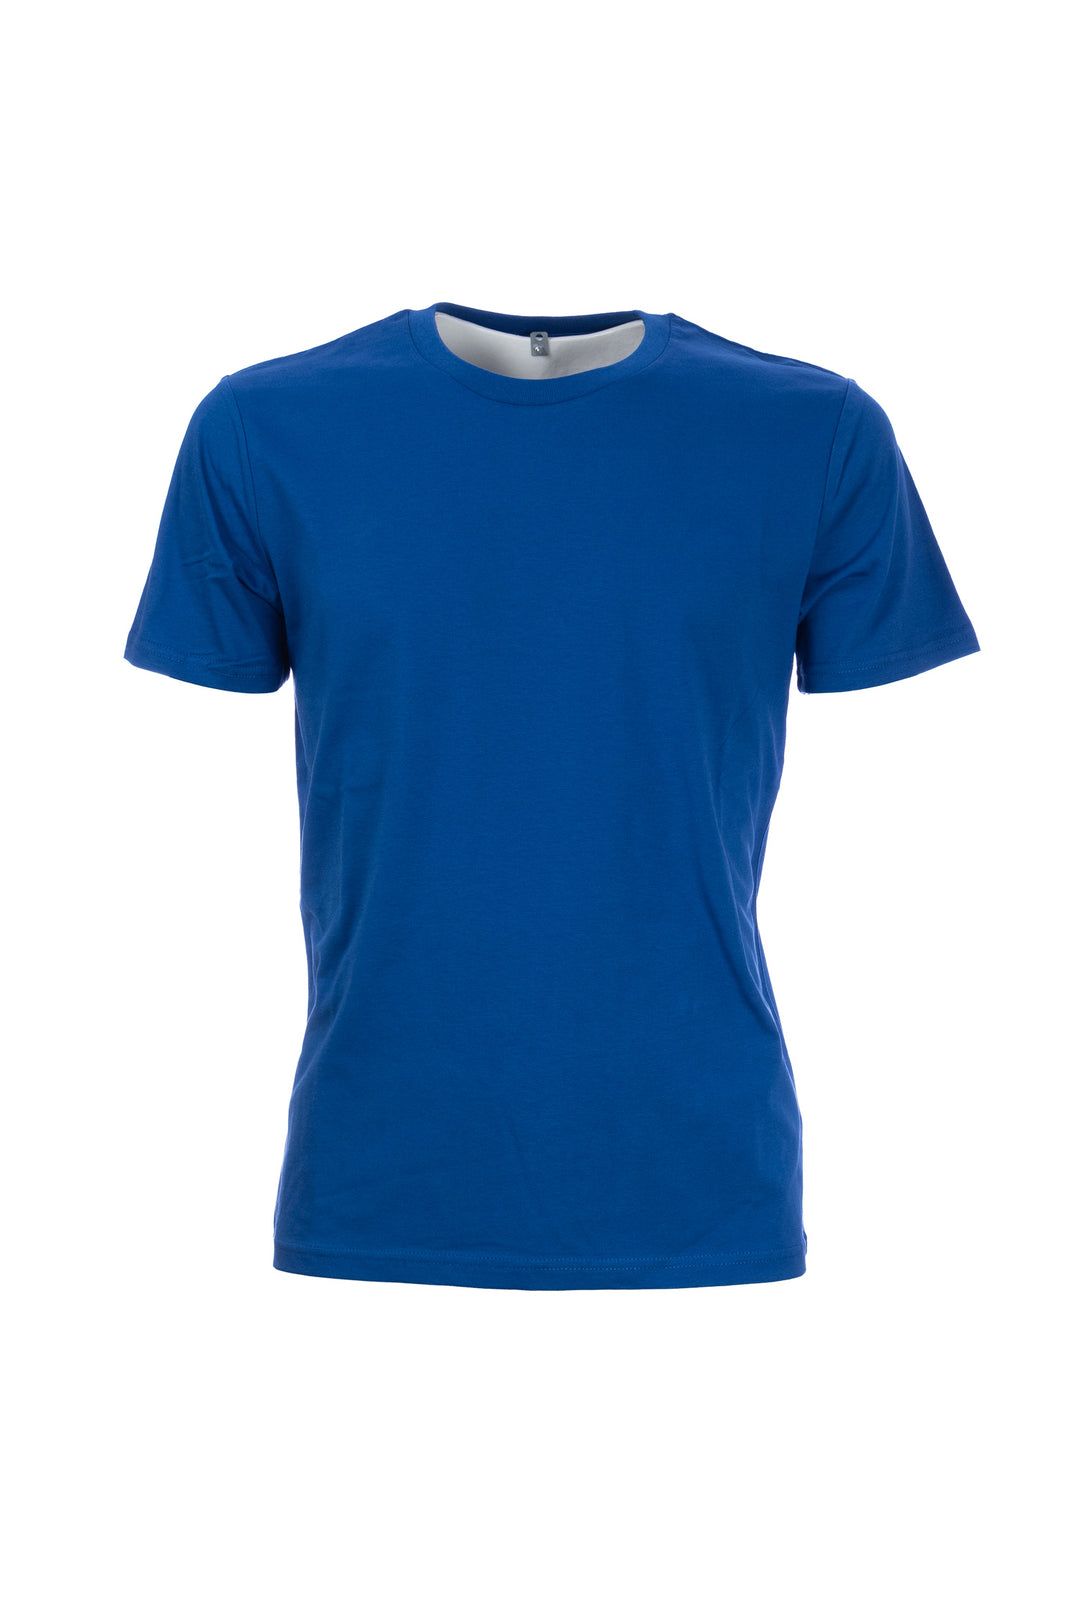 Mancinelli 1954 T-shirt blu tinta unita in cotone - Mancinelli 1954